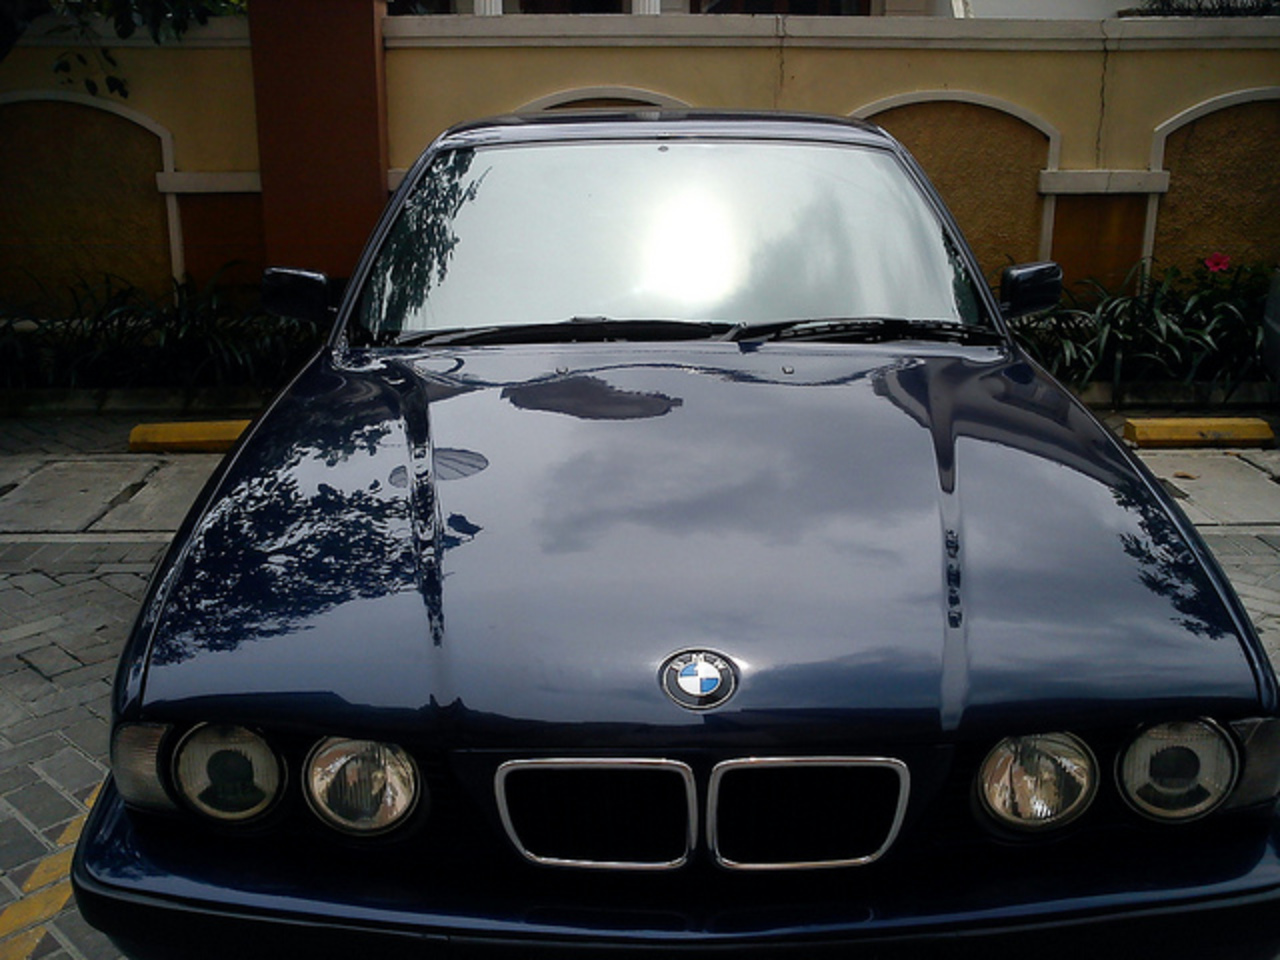 BMW 520i E34 M50 VANOS ENGINE 1995 | Flickr - Photo Sharing!